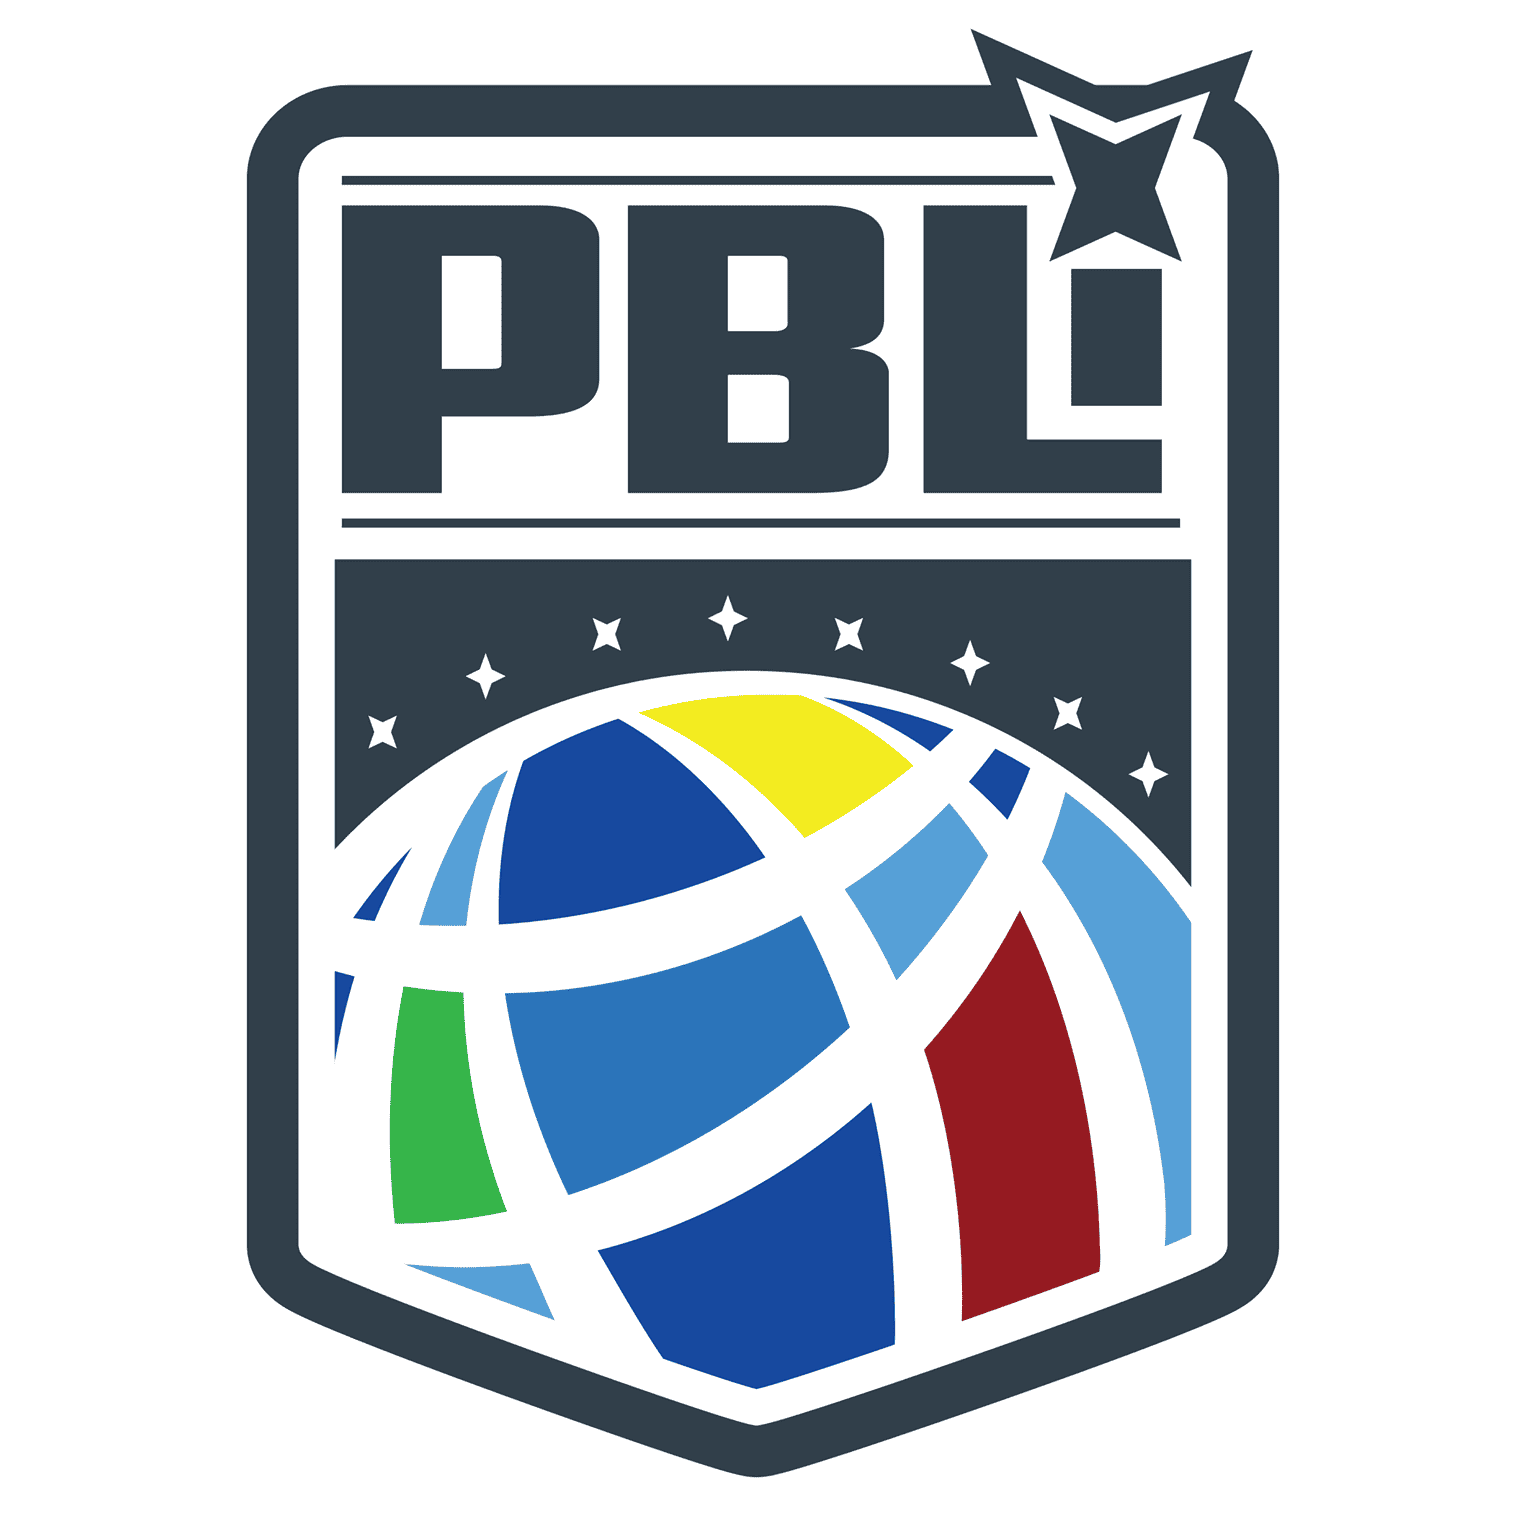 PBLI: The Paintball League International